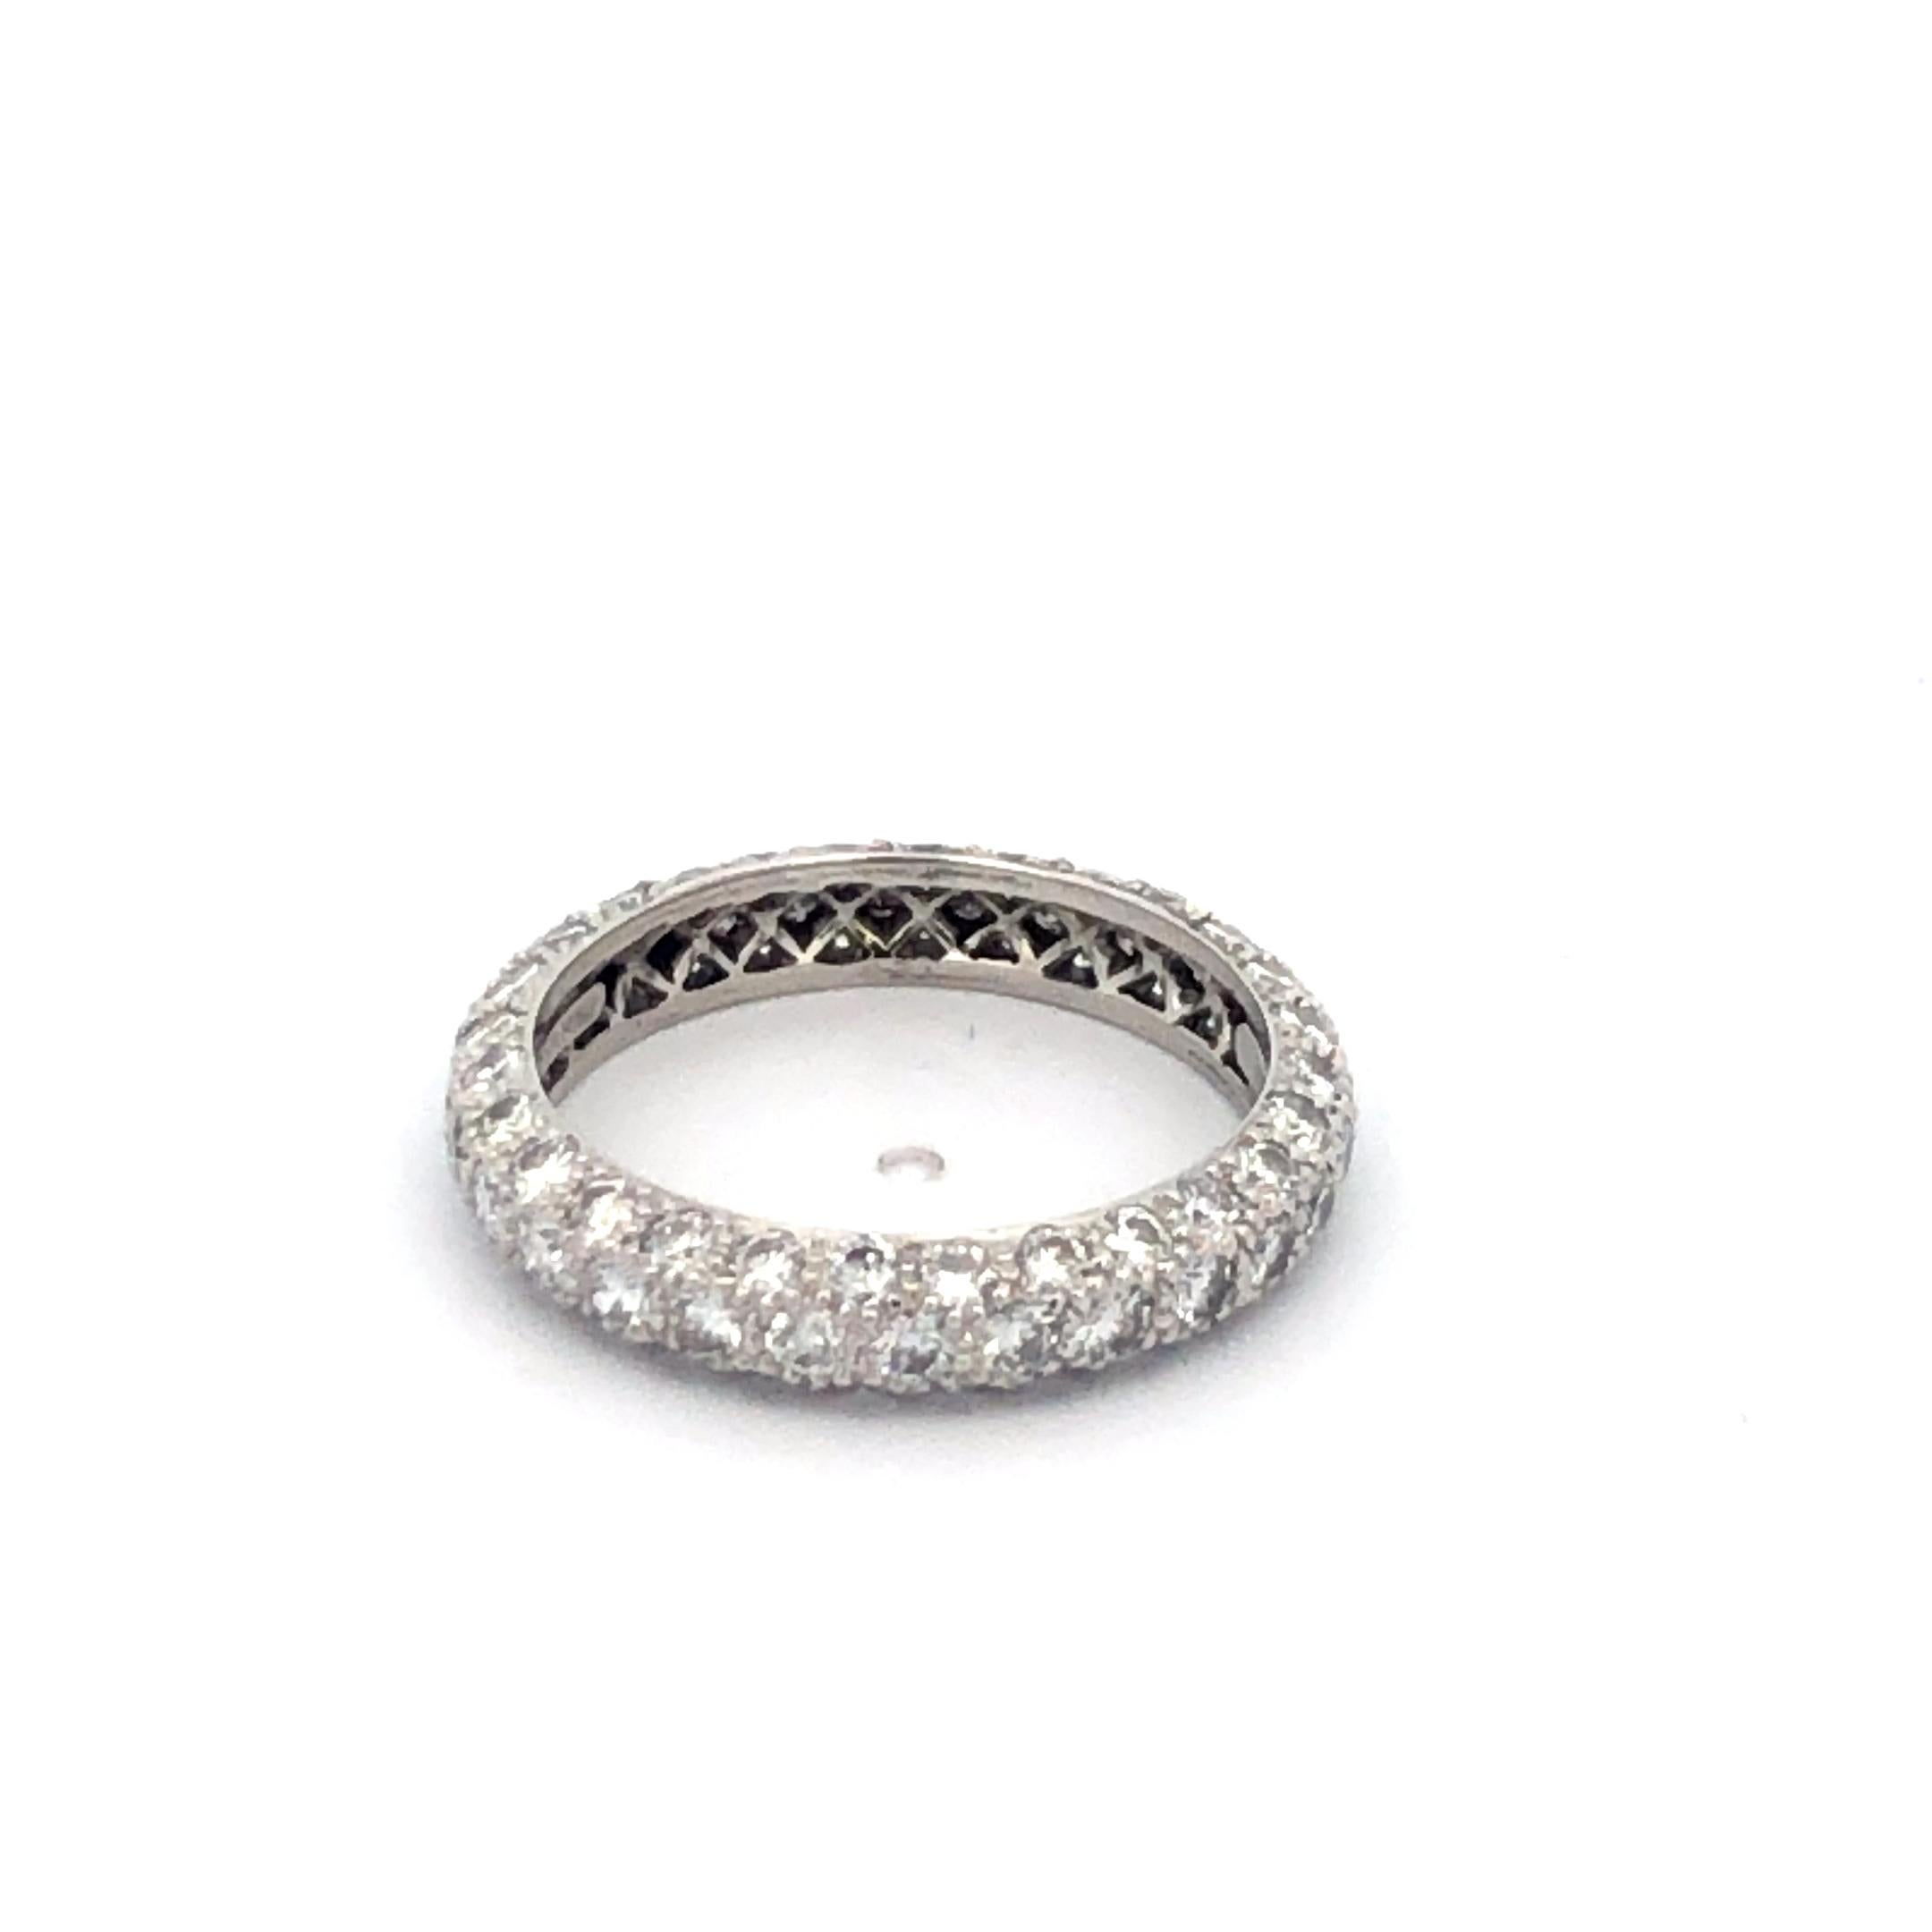 Tiffany & Co. Bague Etoile 1.80ctw Diamond Ring Platinum Taille 6 1/2
3.75mm
3,5 grammes